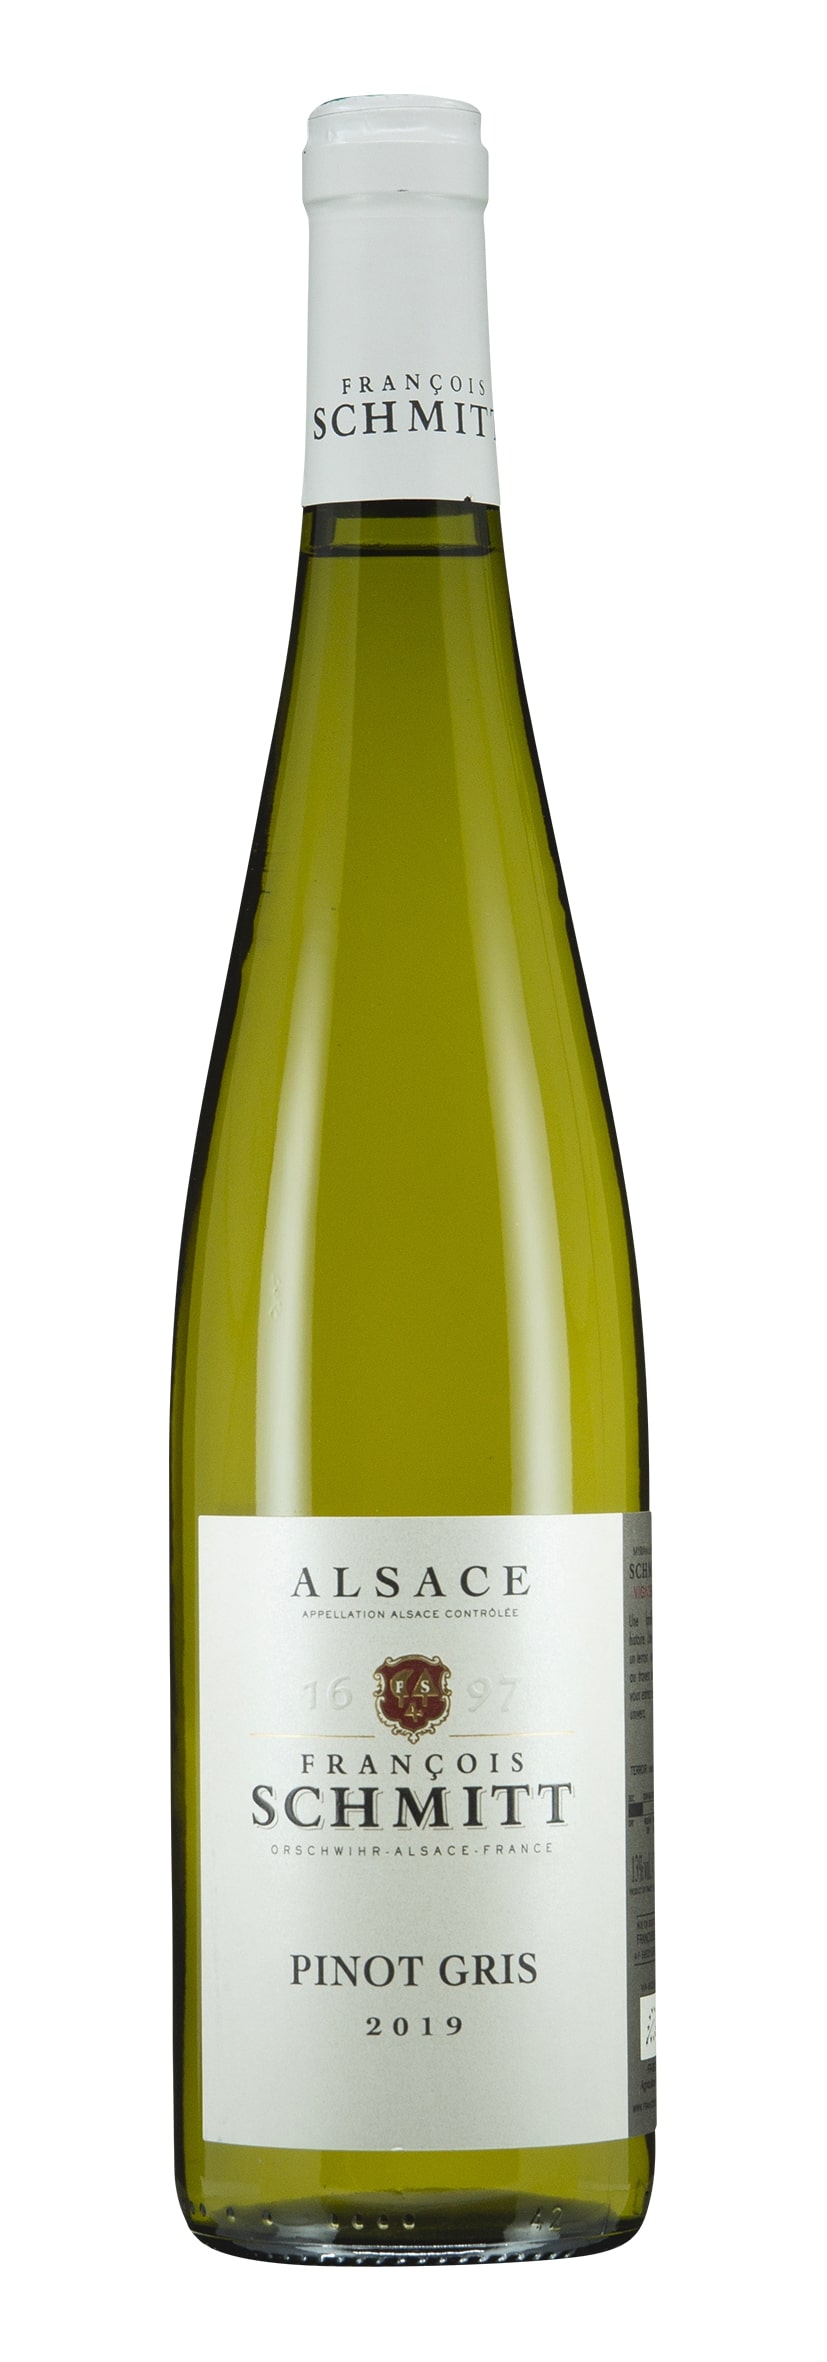 Alsace AOC Pinot Gris 2019